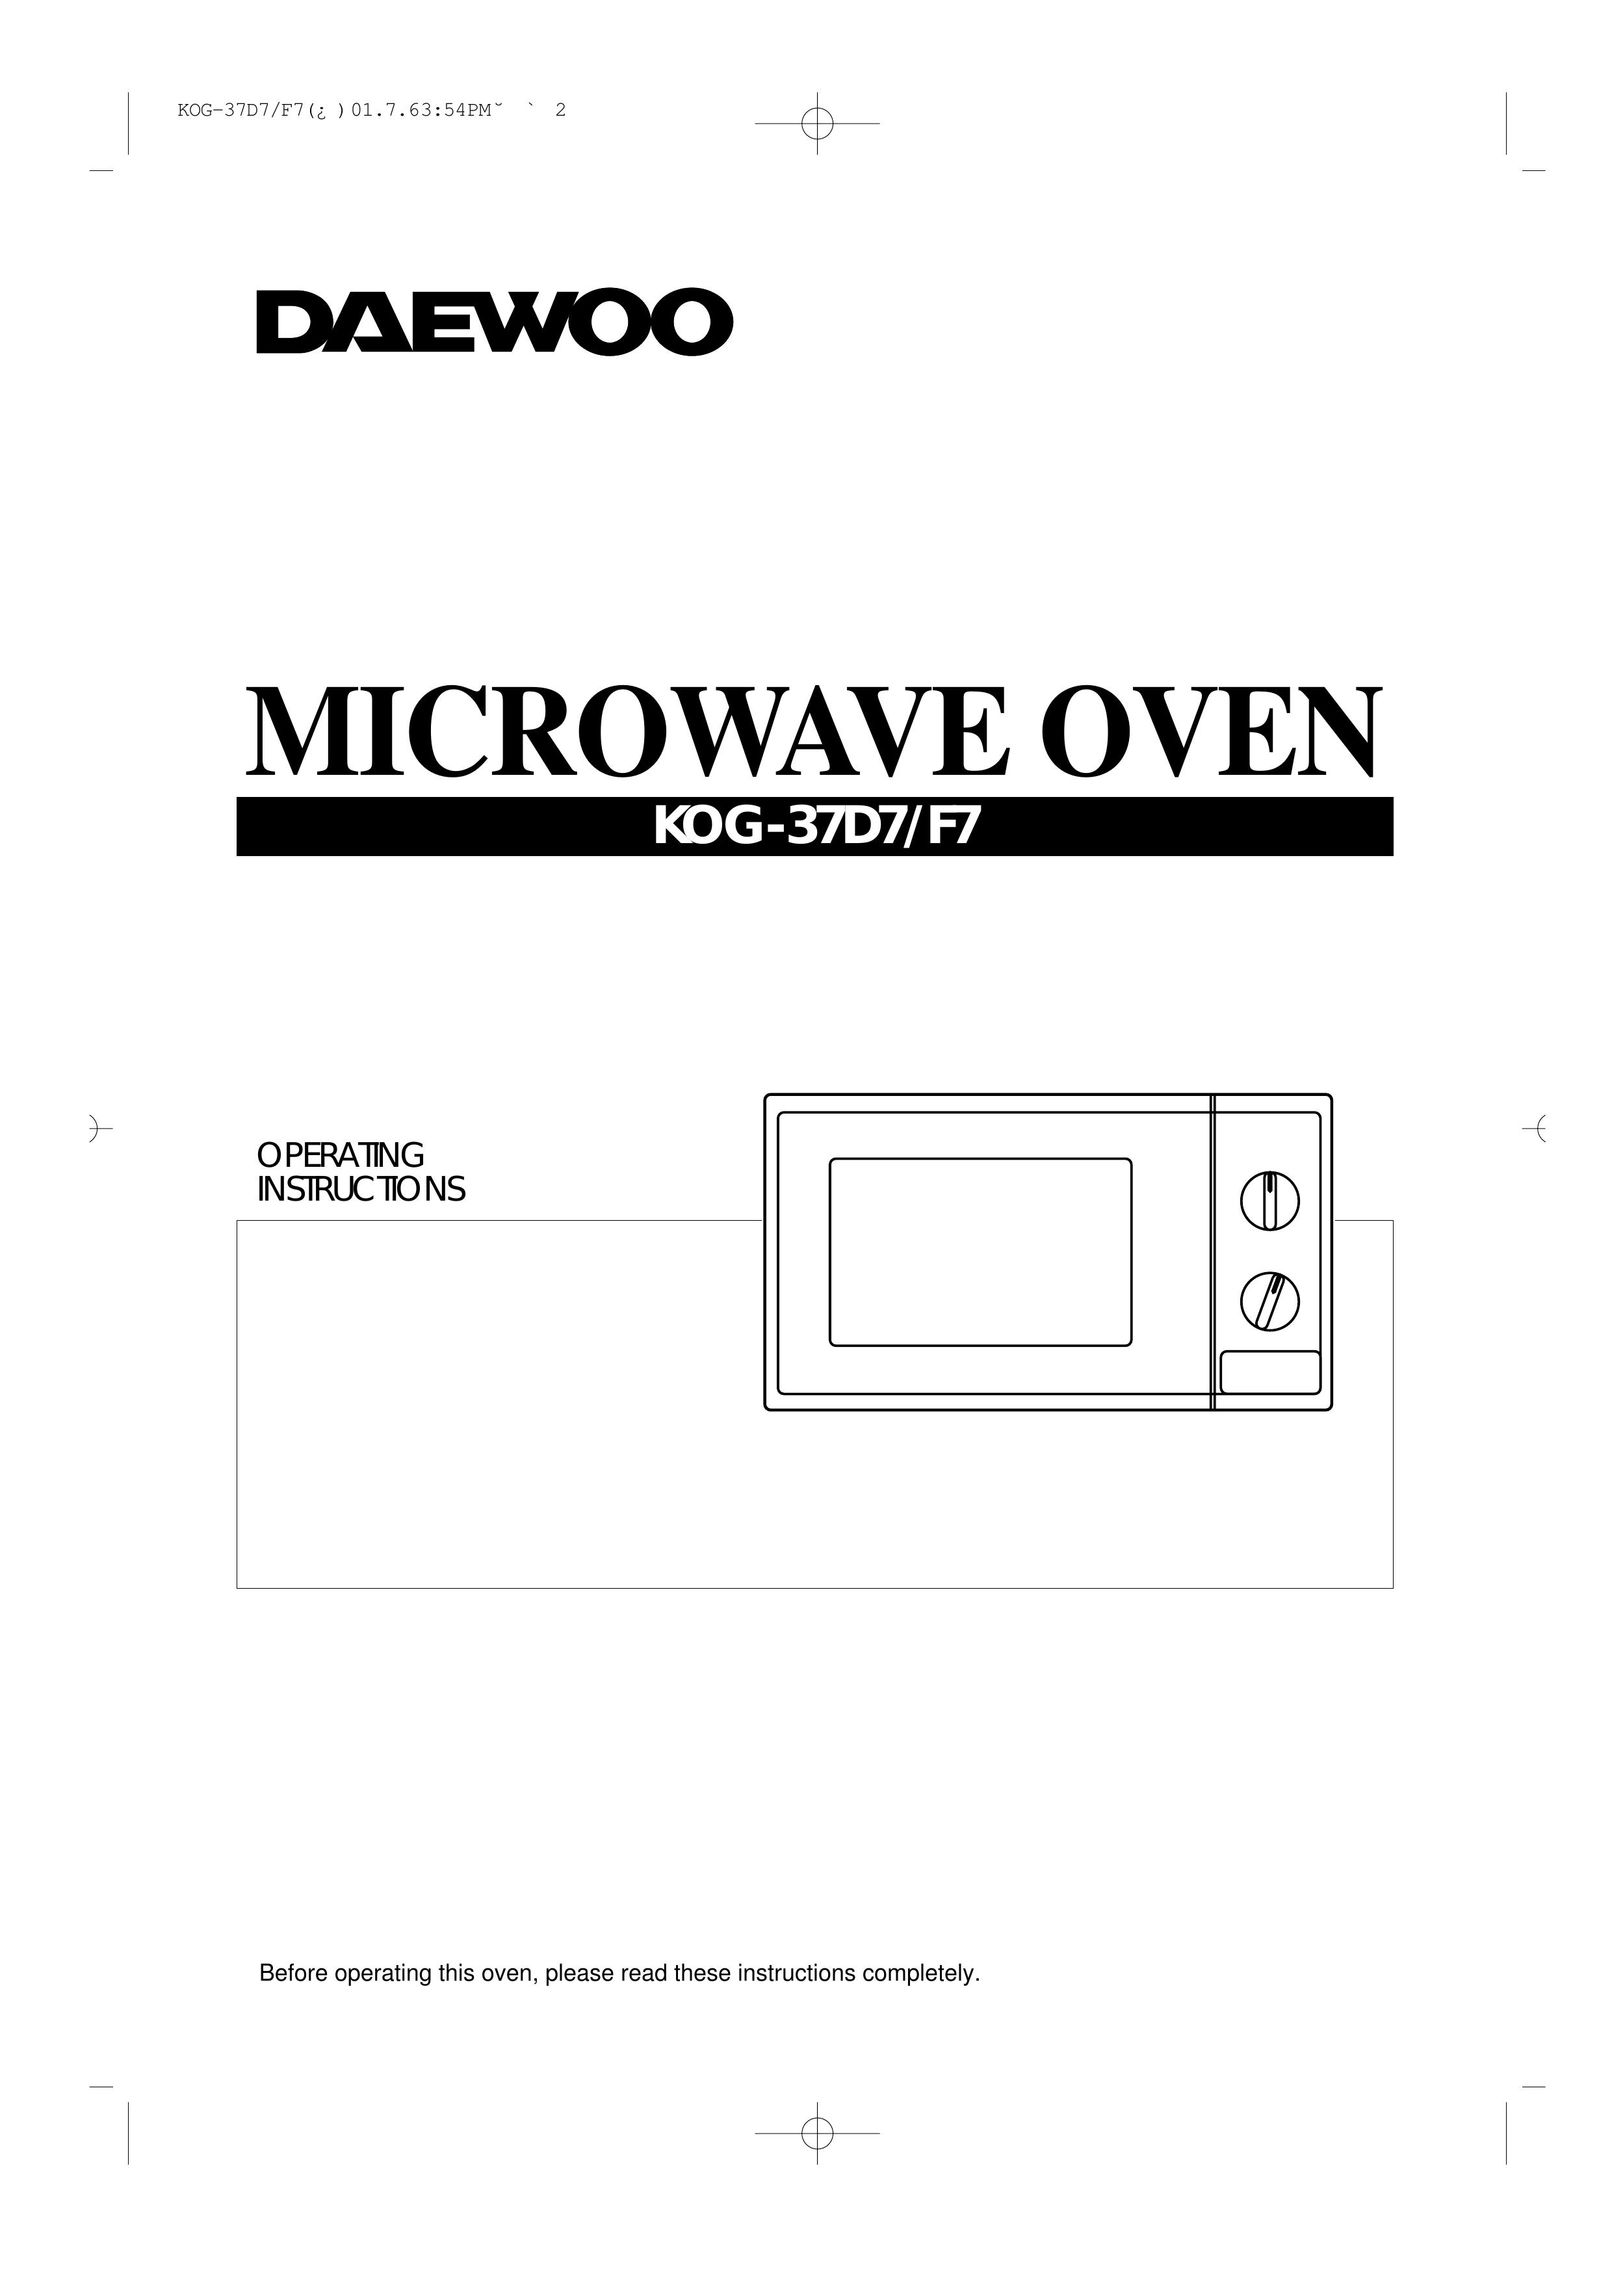 Daewoo KOG-37D7/F7 Microwave Oven User Manual